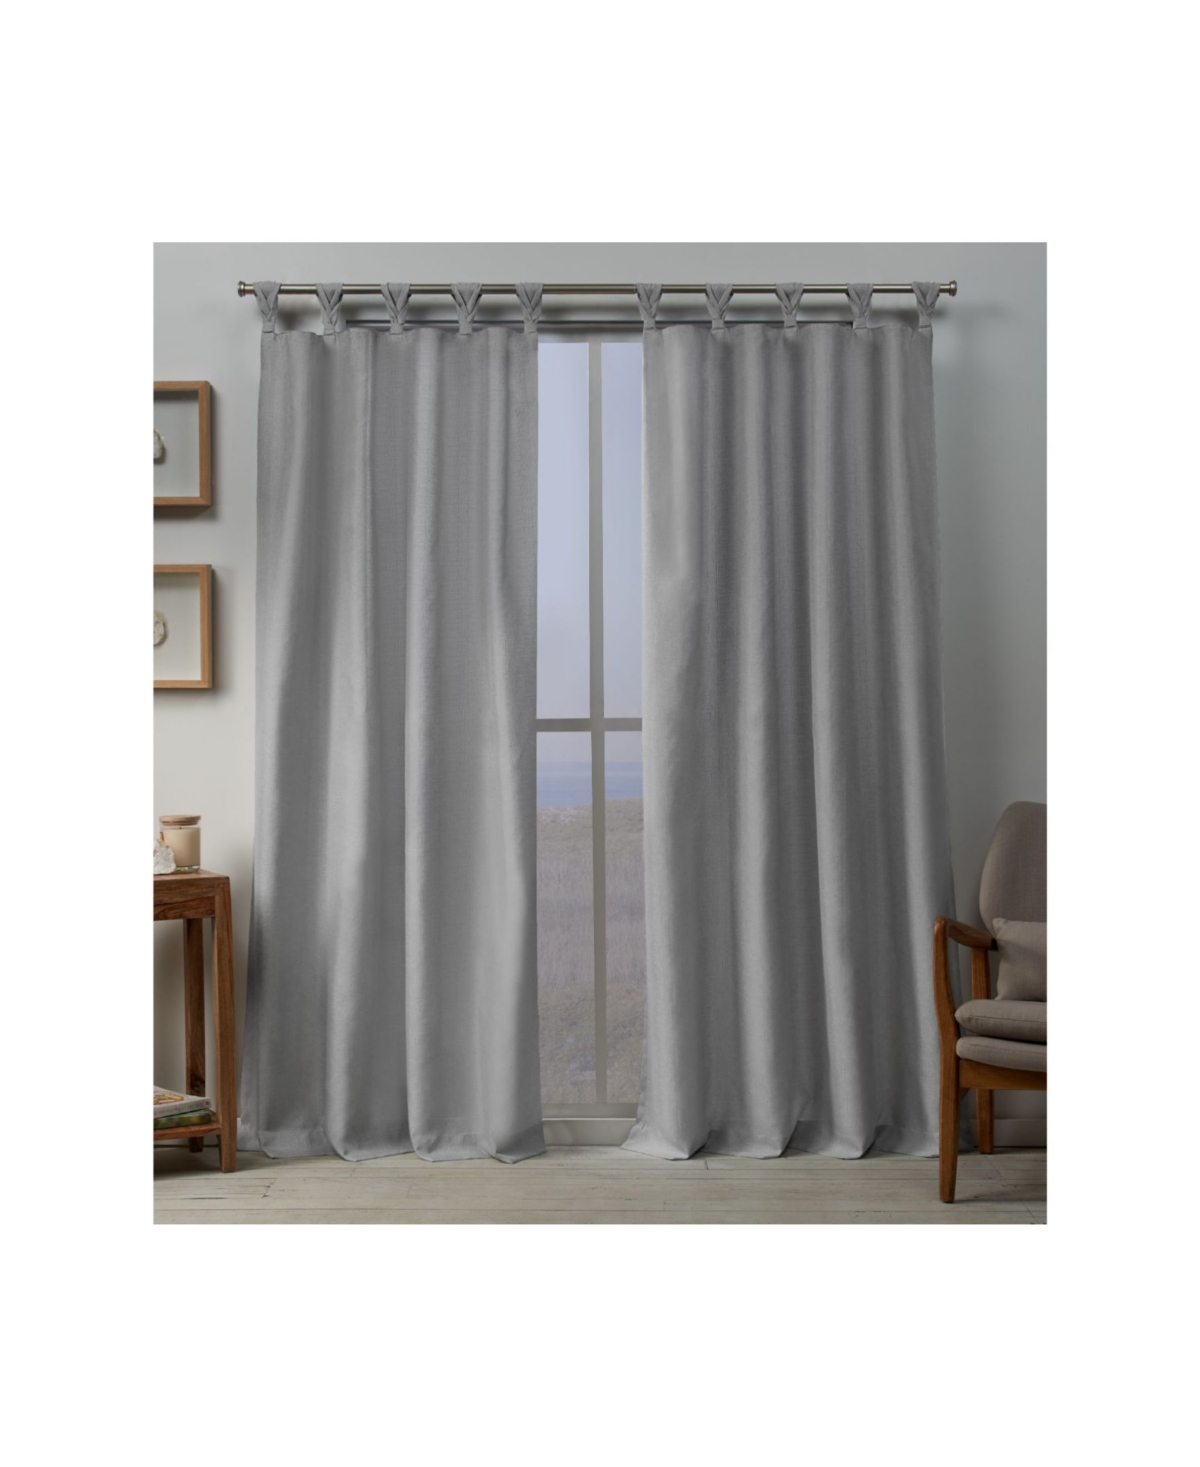 Loha Linen Braided Tab Top Curtain Panel Pair, 54" x 84" - Beigekhaki